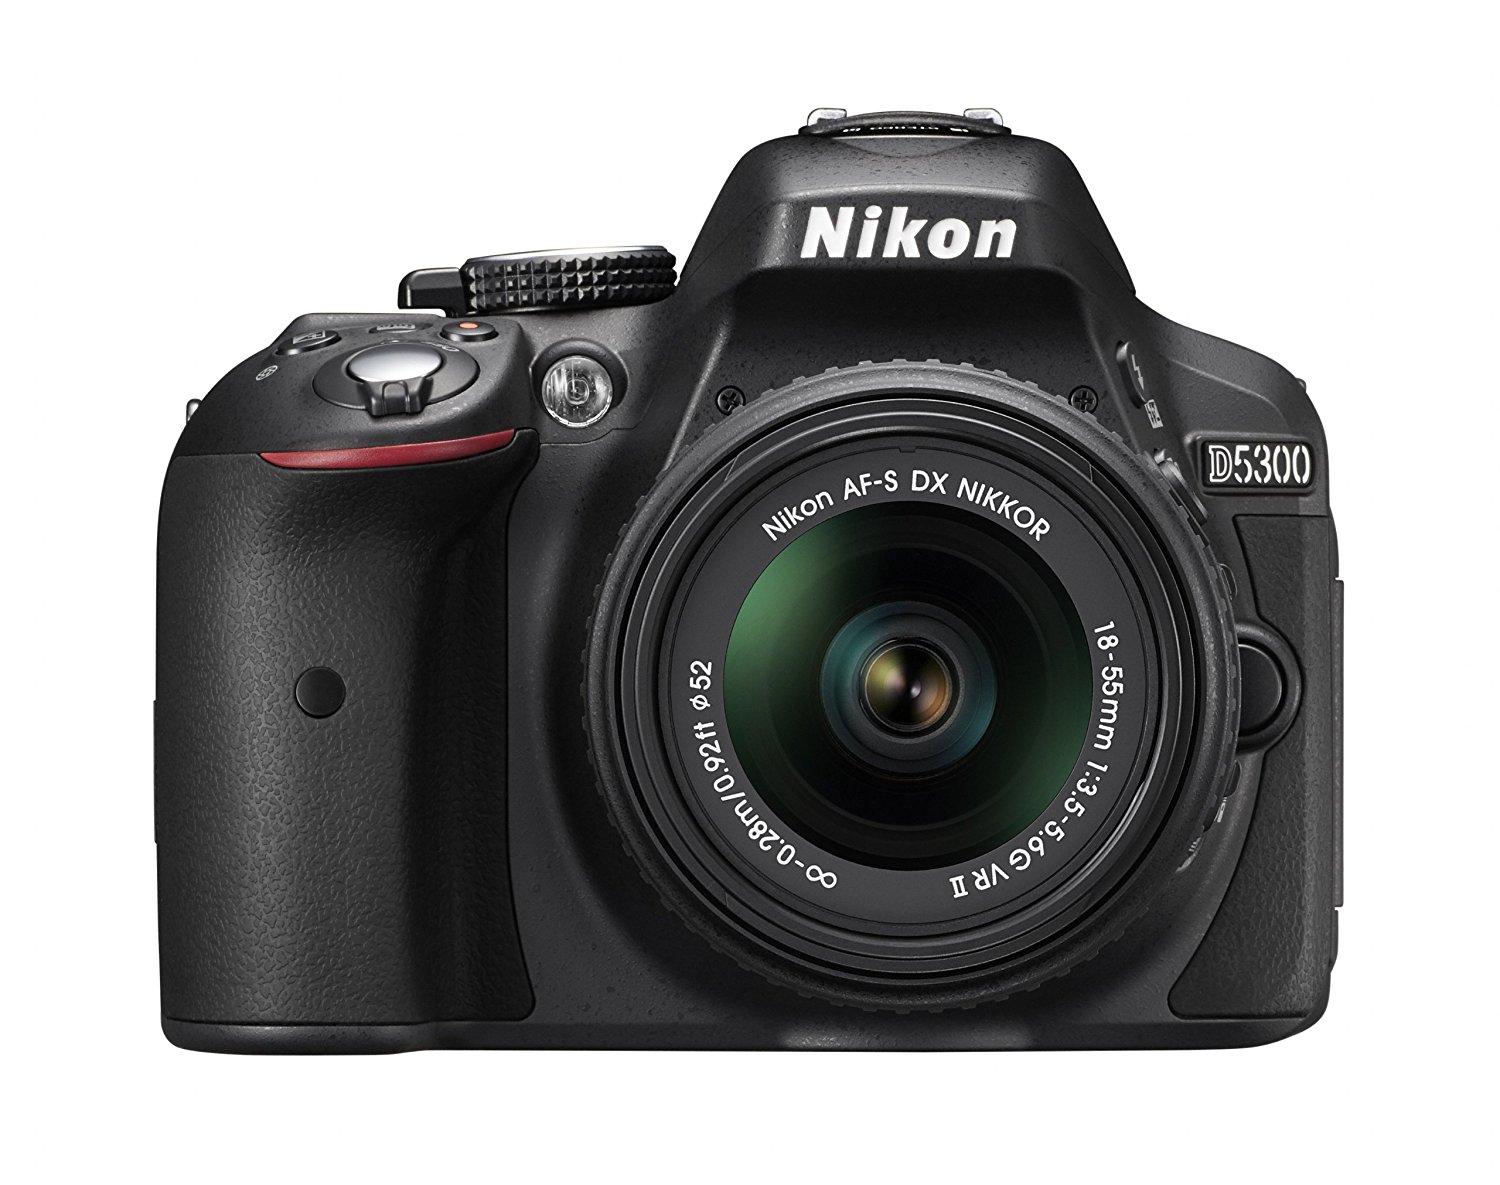 Nikon D5300 24.2 MP CMOS Digital SLR Camera with 18-55mm f/3.5-5.6G ED VR II Auto Focus-S DX NIKKOR Zoom Lens (Black)